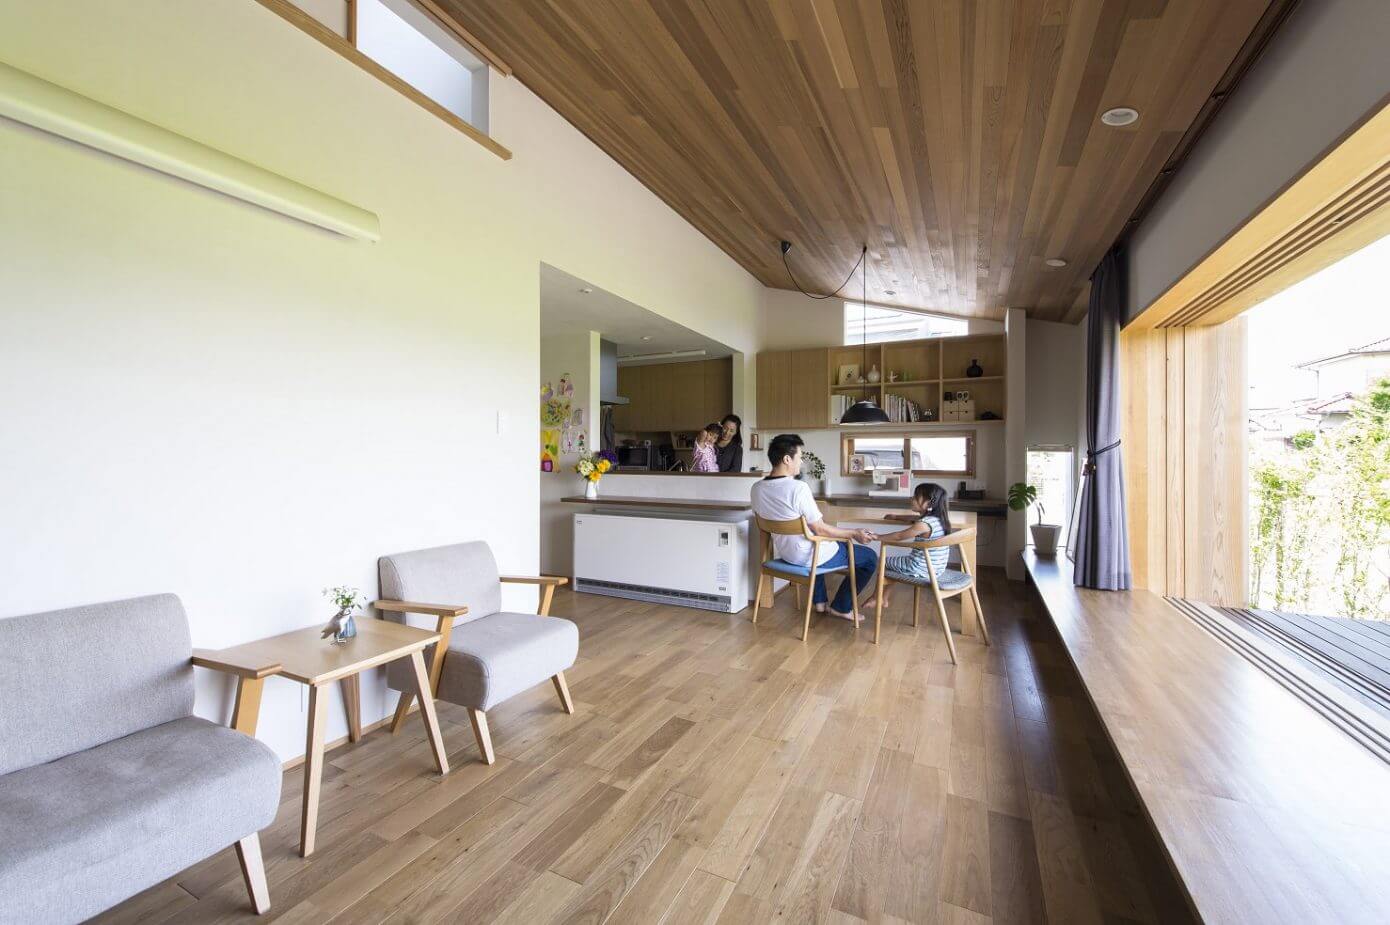 House in Itoshima by Teto Architects